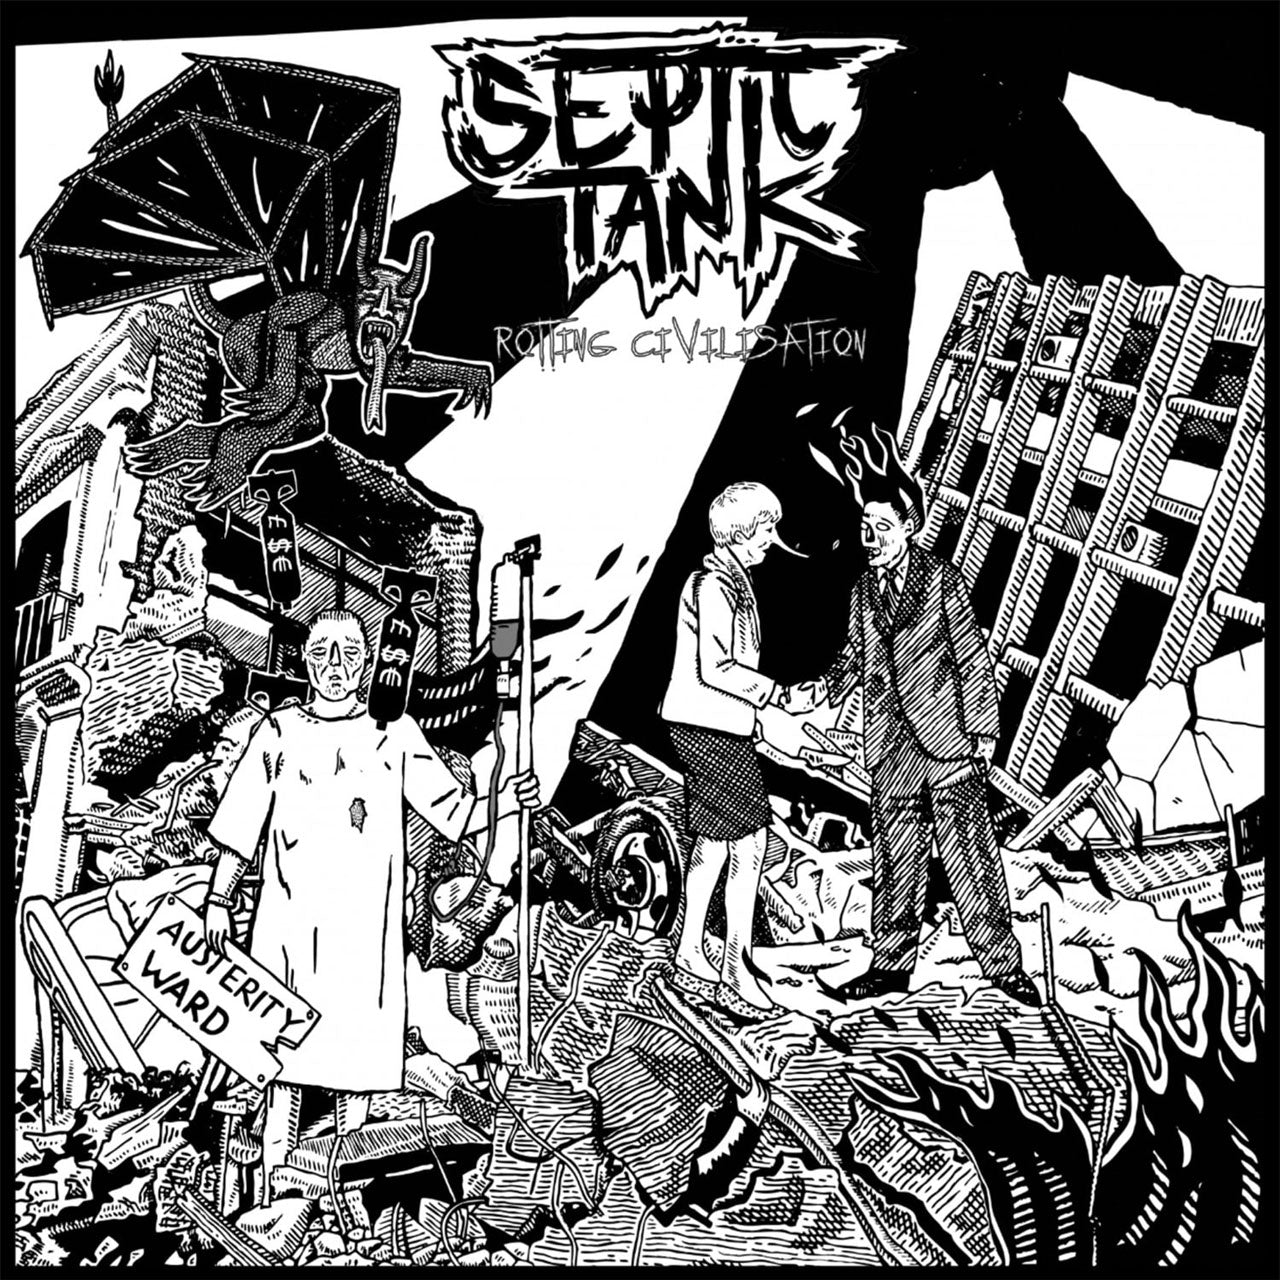 Septic Tank - Rotting Civilisation (CD)